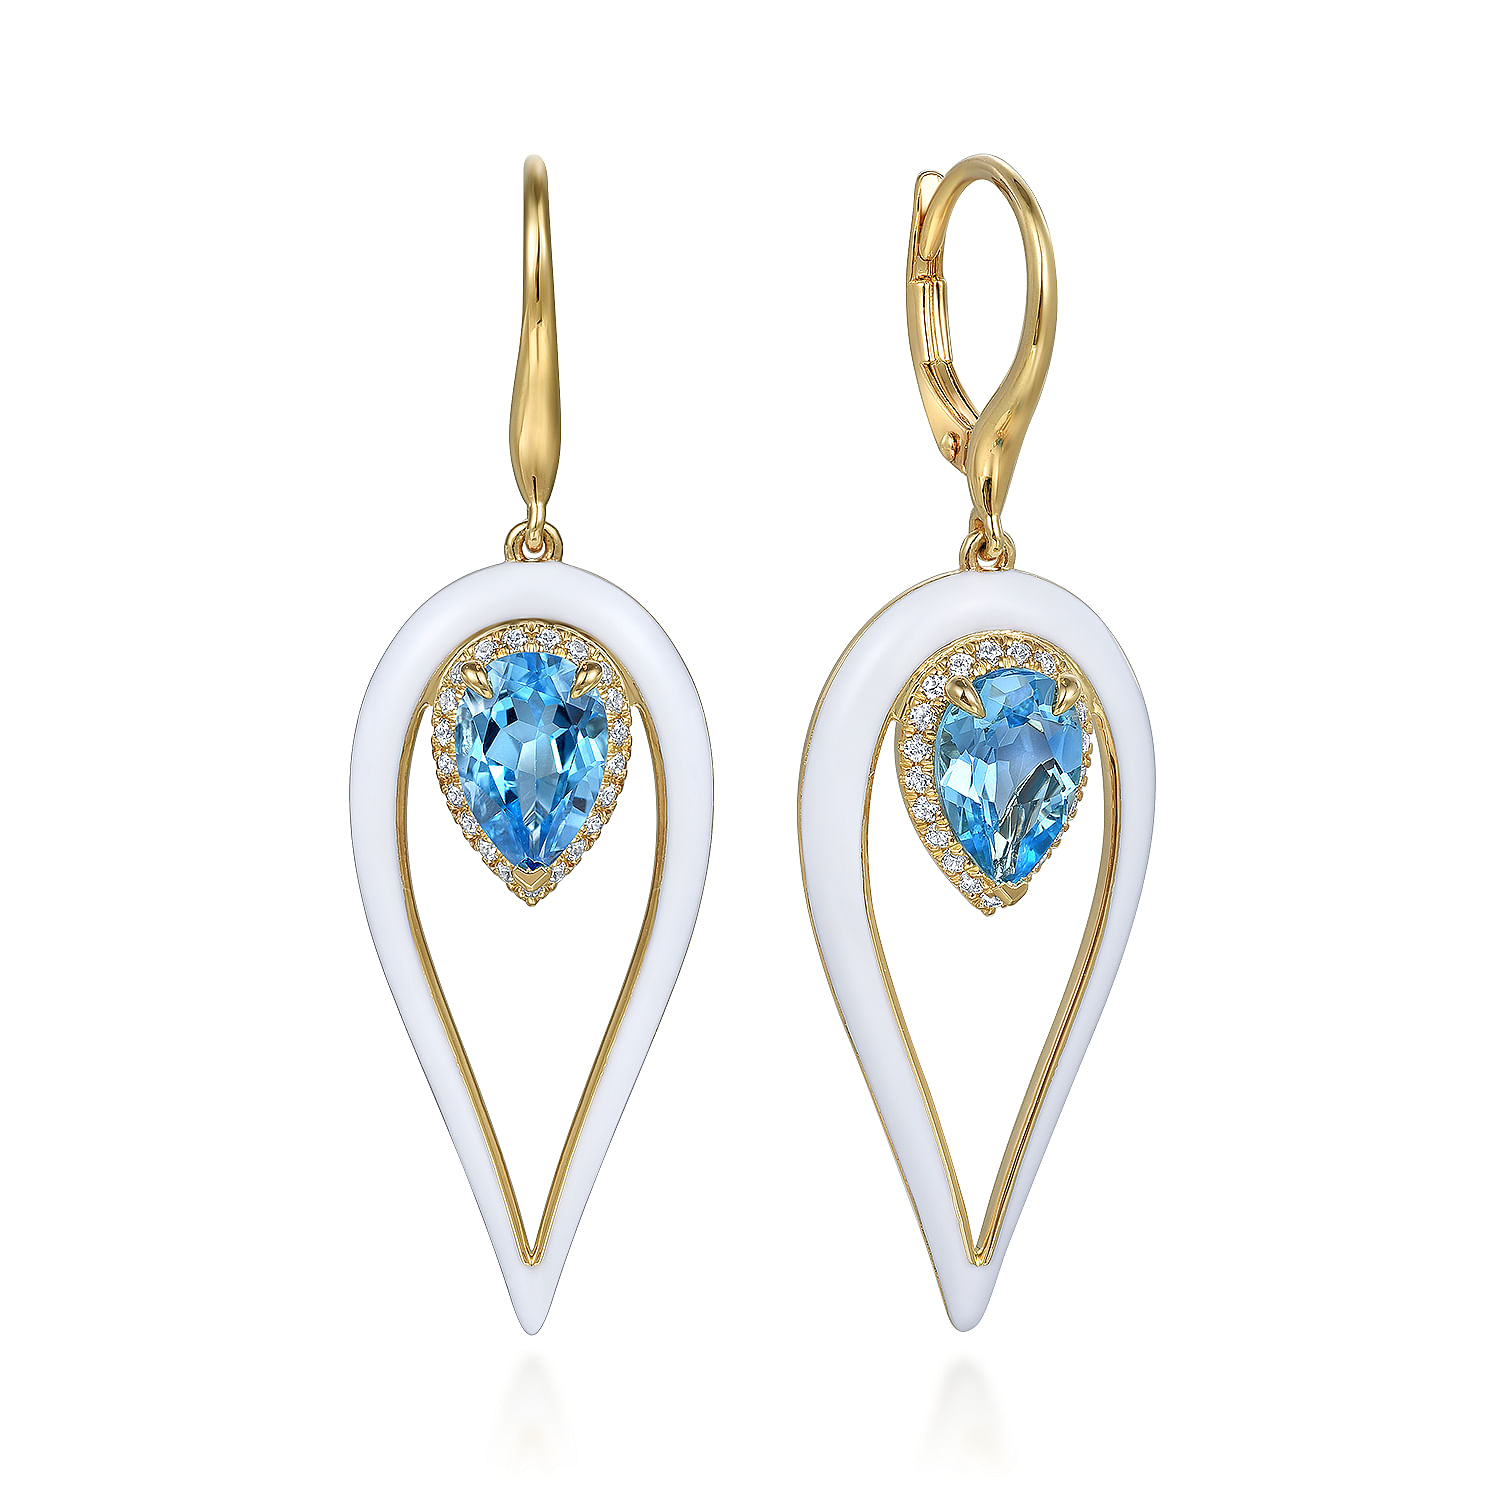 14K Yellow Gold Diamond and Blue Topaz Long Pear Shape Drop Earrings With White Enamel